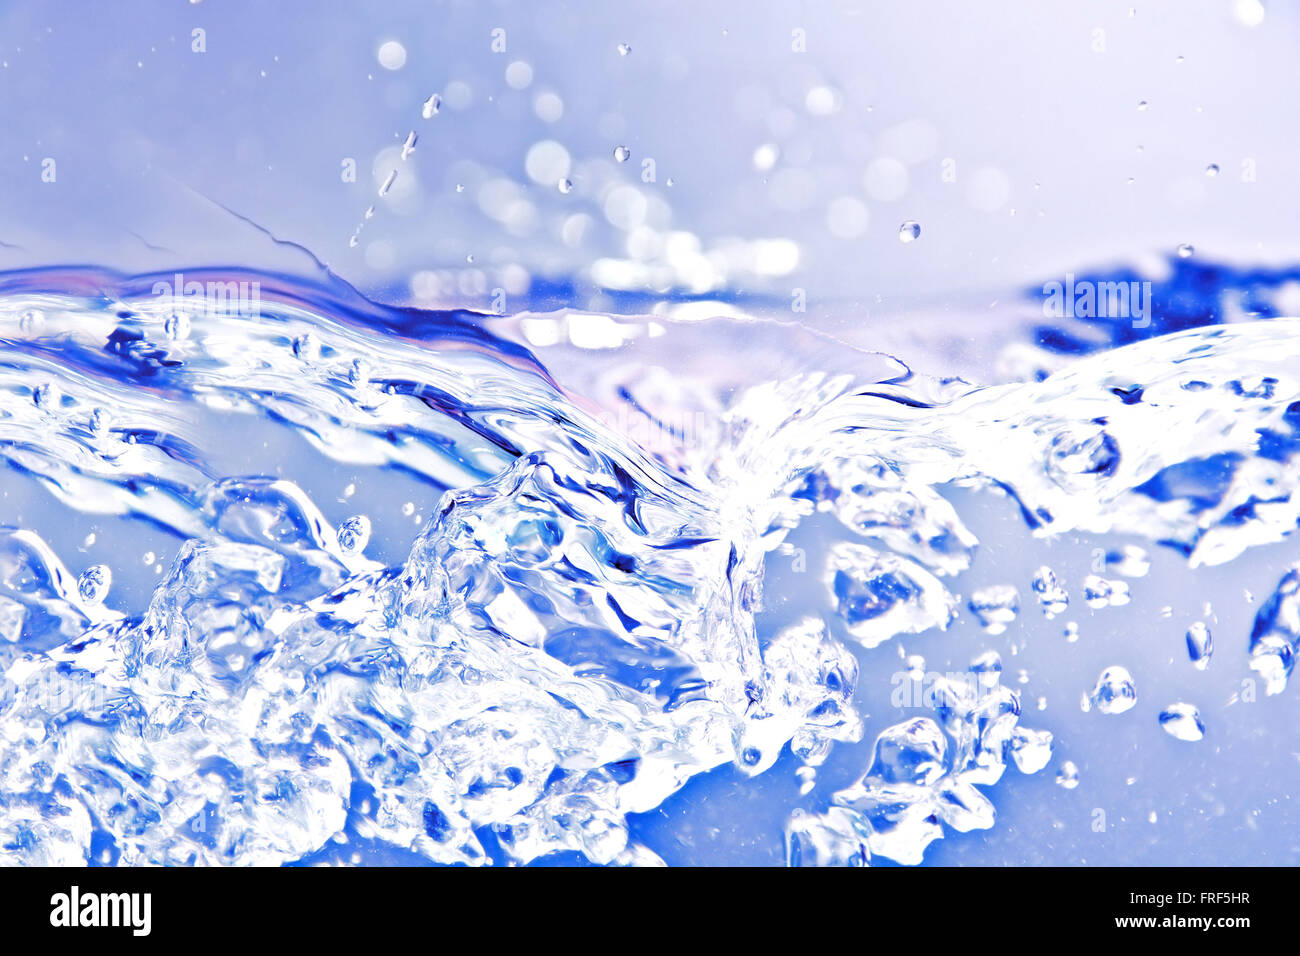 Isolierte Blauwasser Splash Hexe Bubles. Abstraktes Bild. Stockfoto